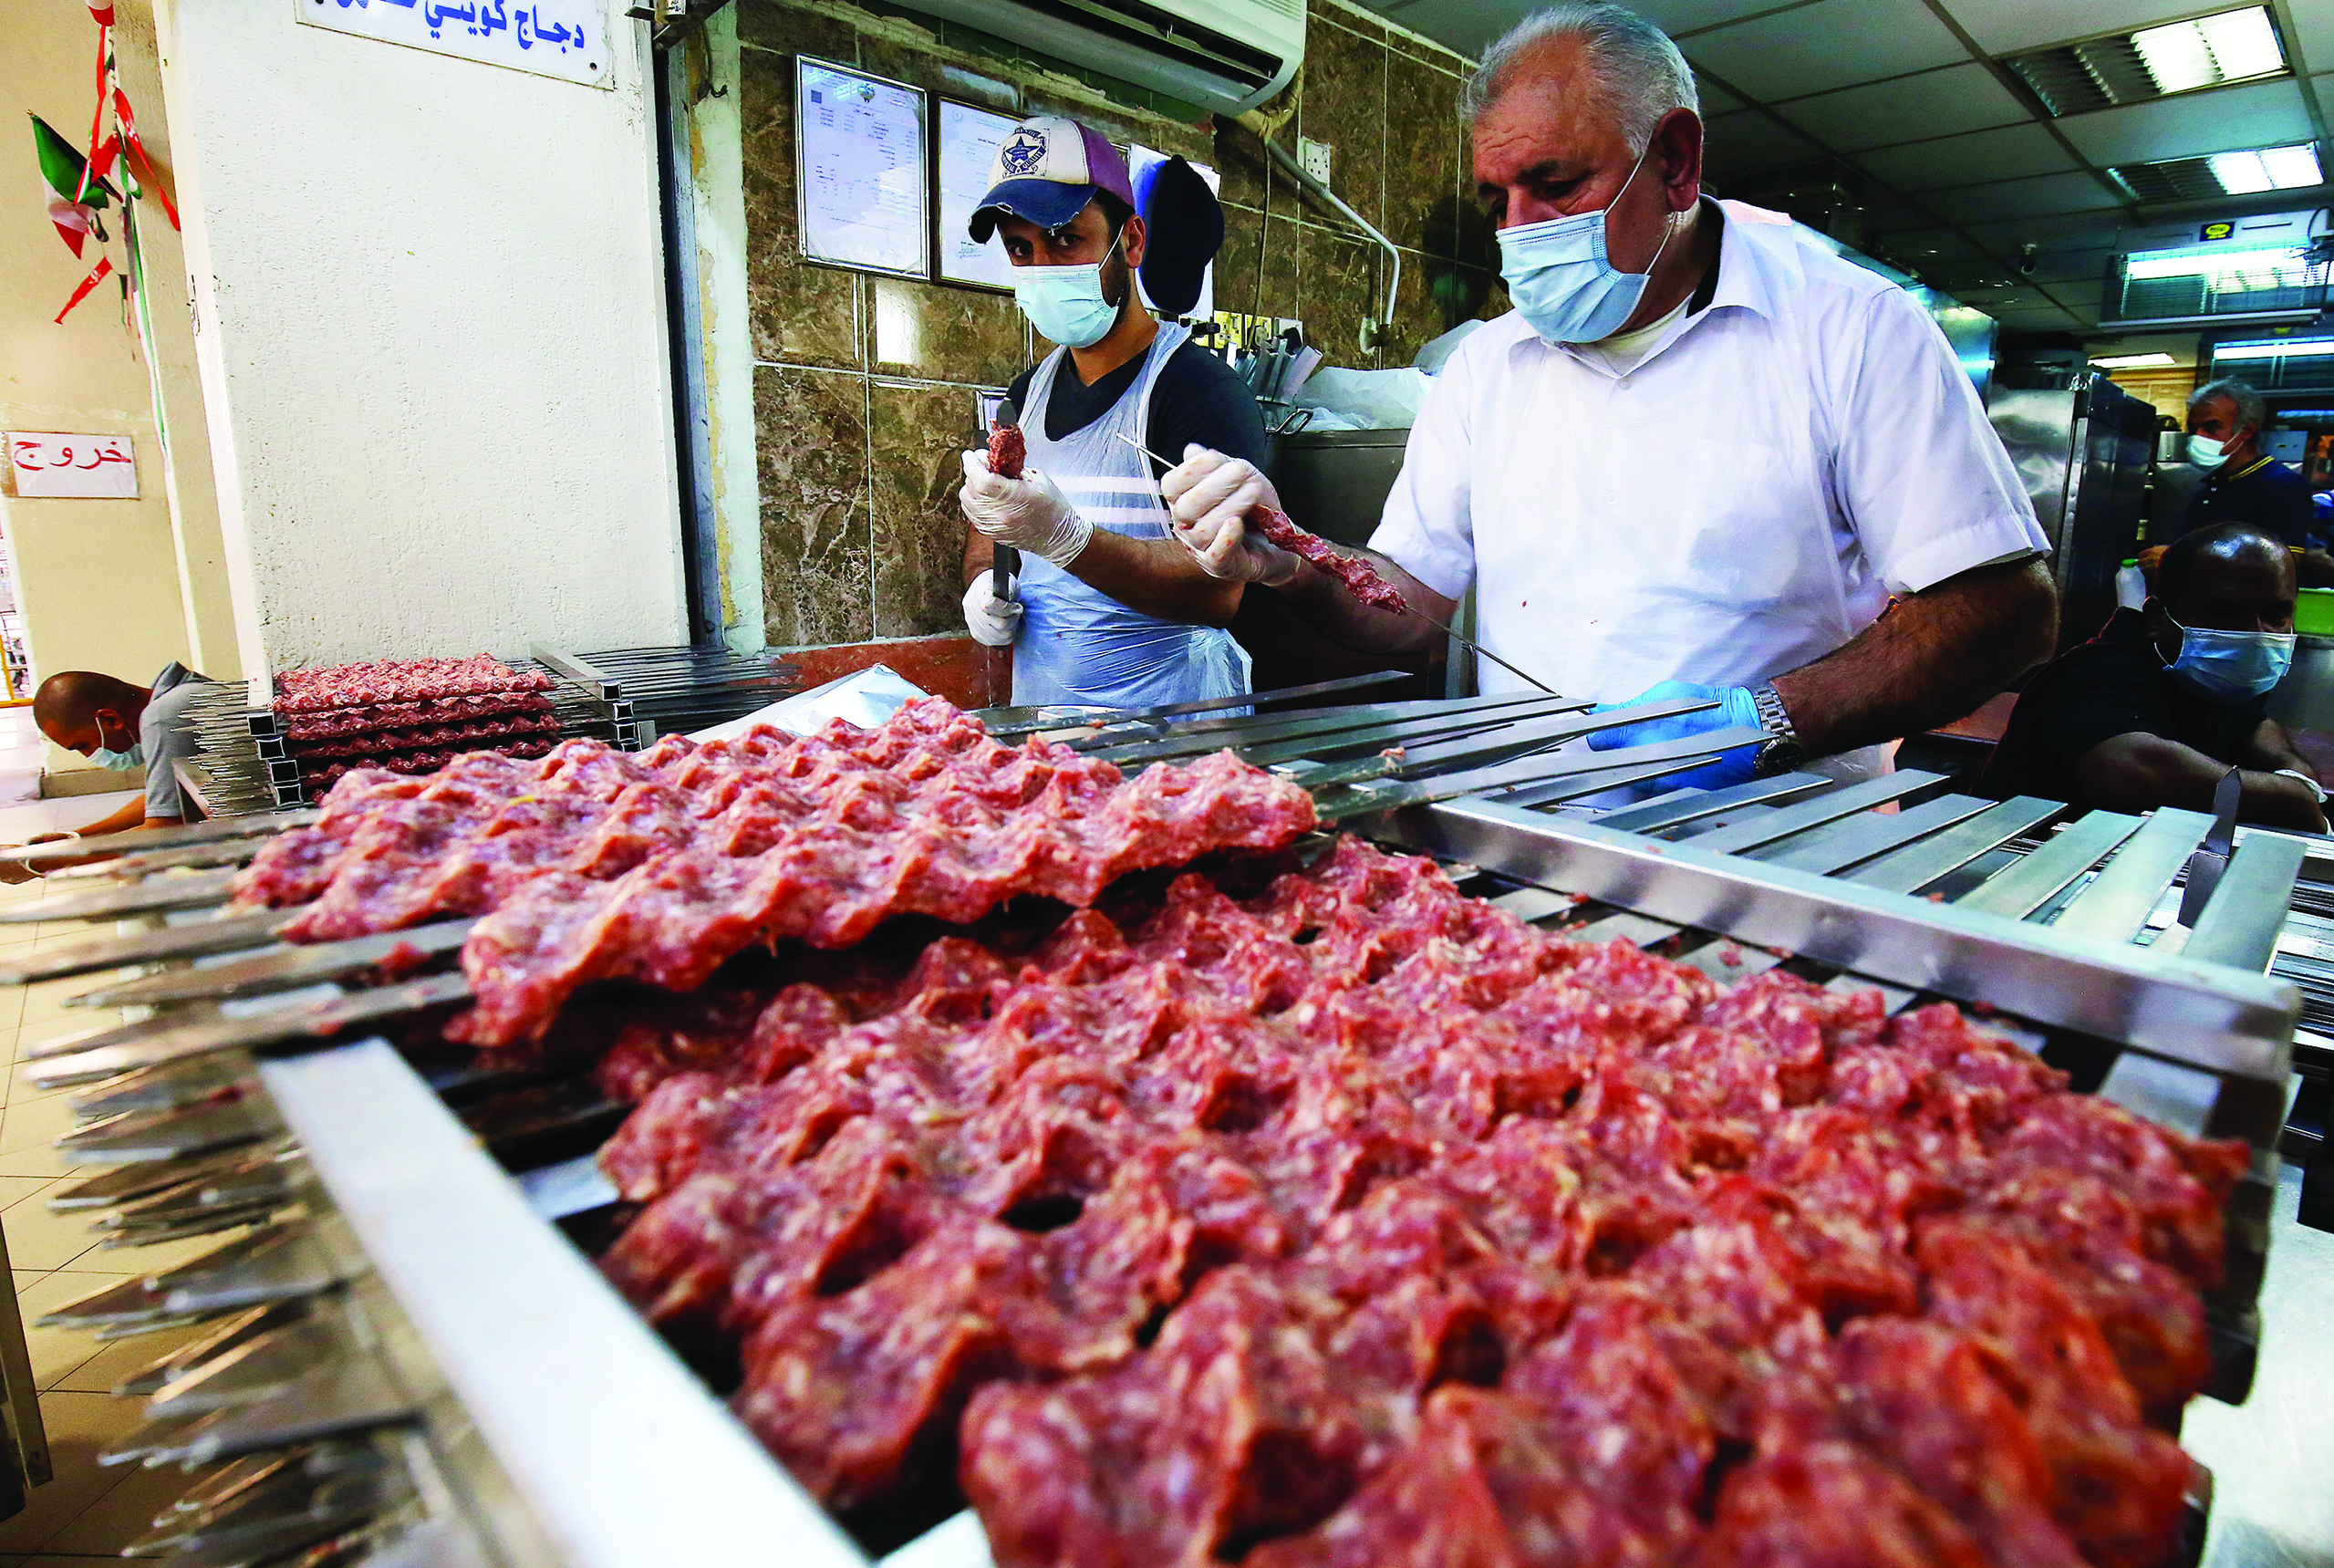 Food vendors wearing face masks prepare kebabs at a market in Kuwait City, on July 20, 2020 amid the Covid-19 coronavirus pandemic crisis. (Photo by YASSER AL-ZAYYAT / AFP)